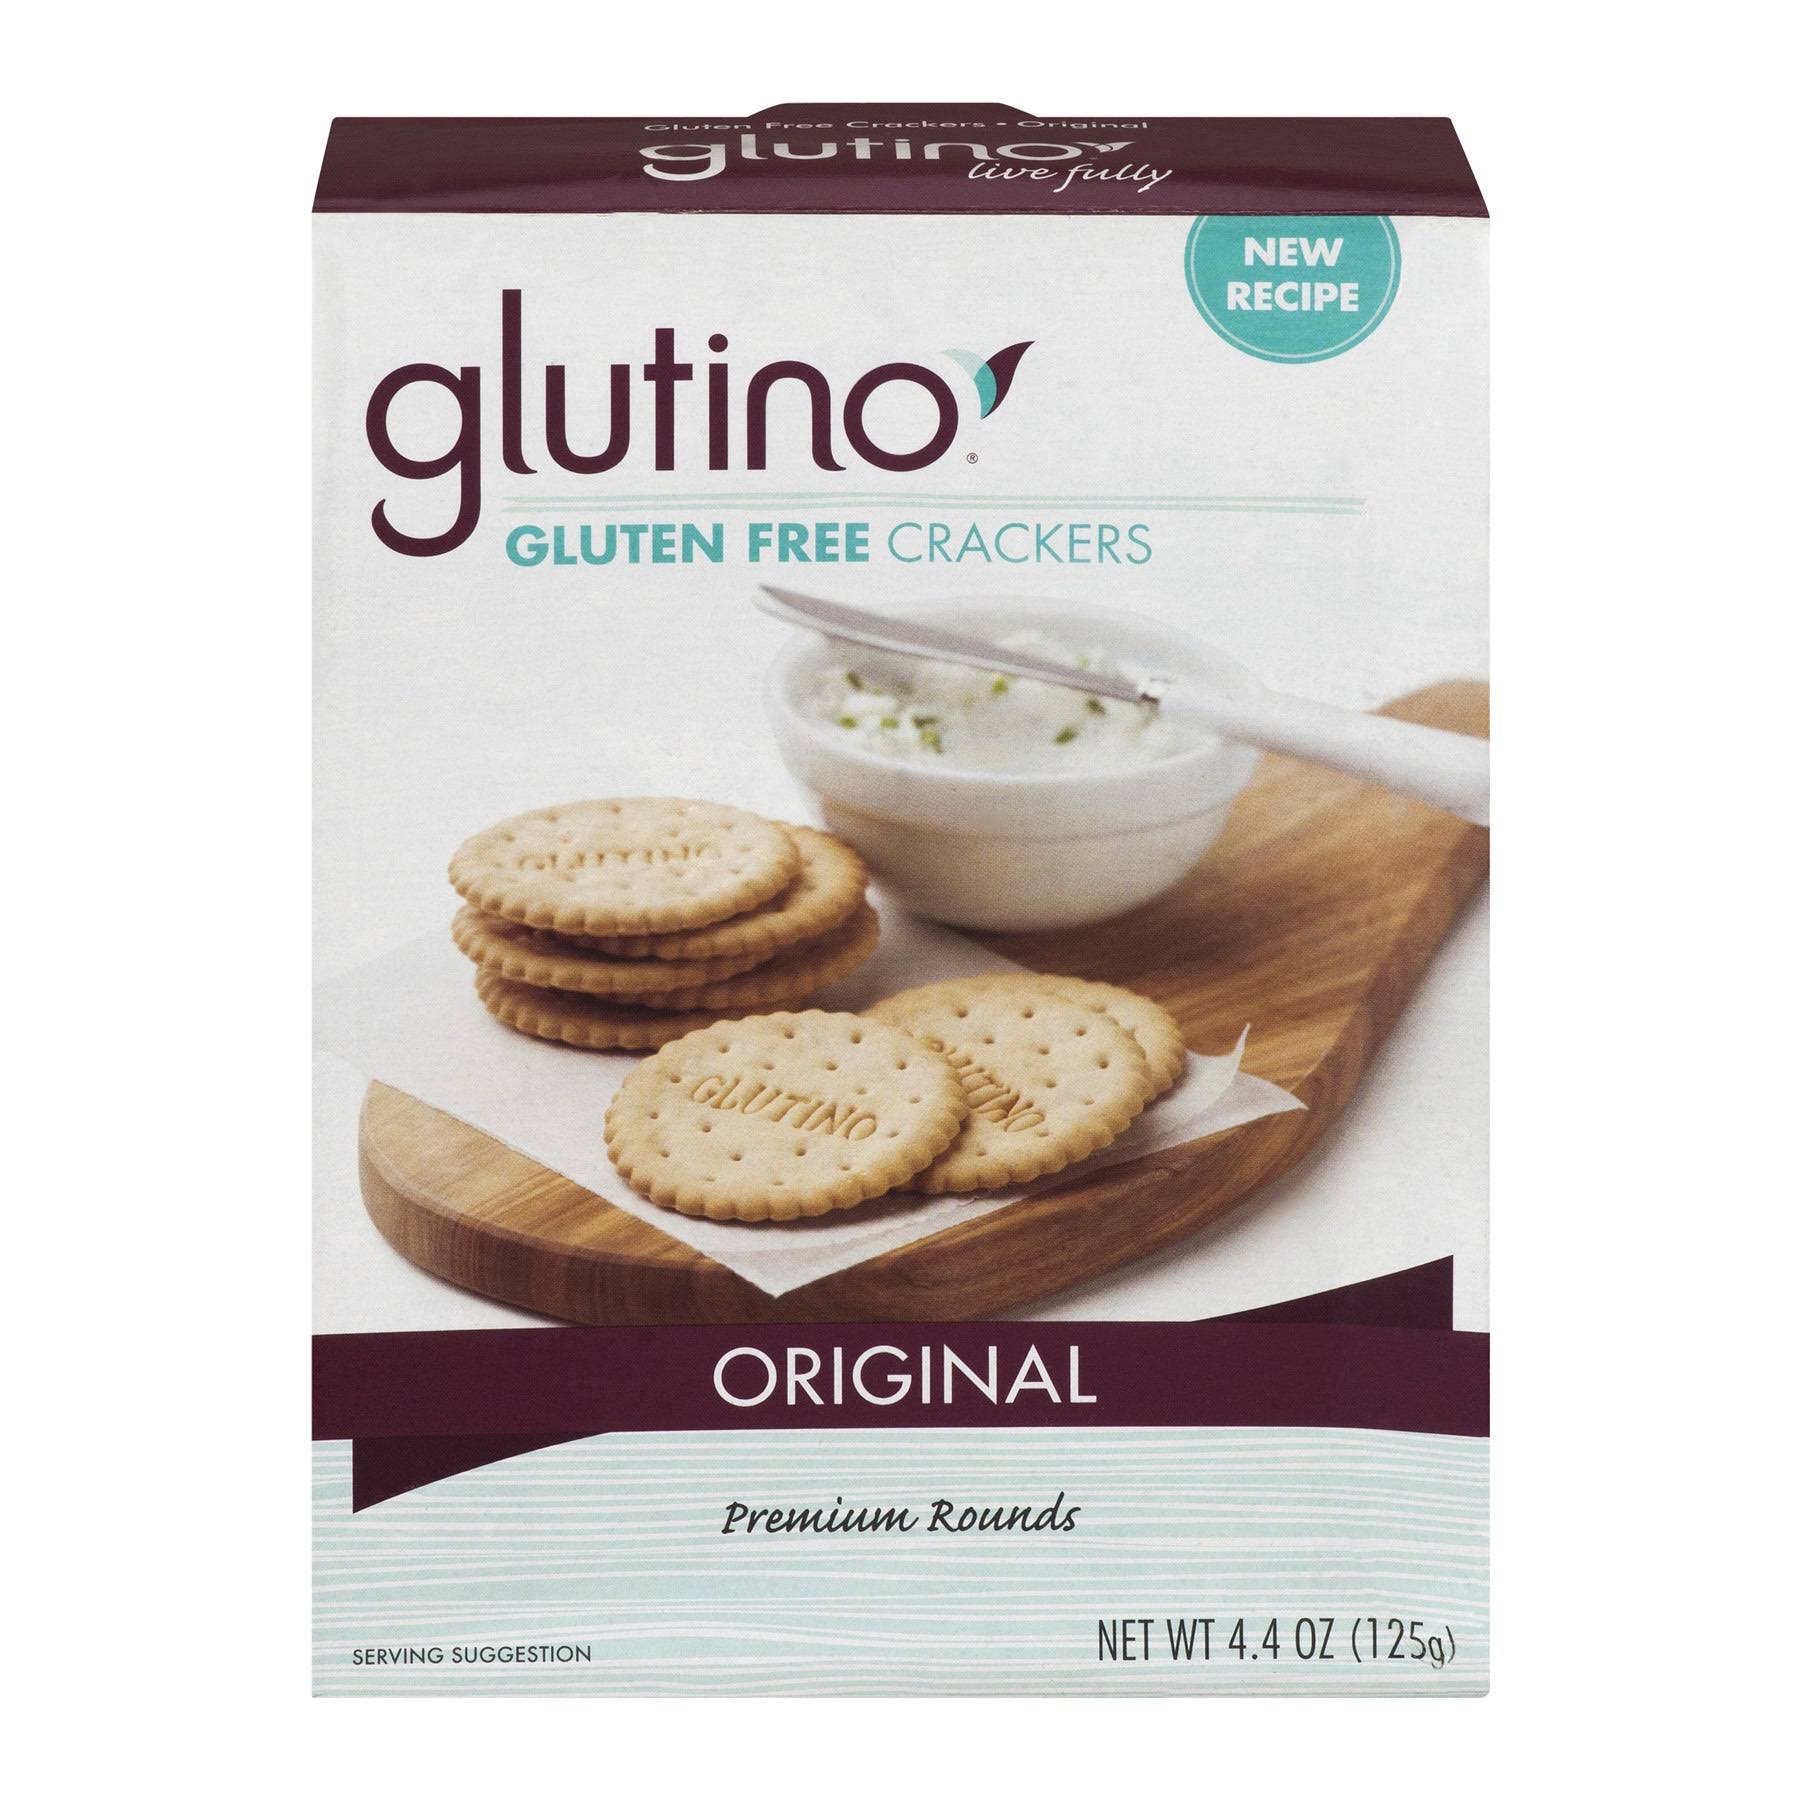 Glutino Gluten Free Crackers - Original